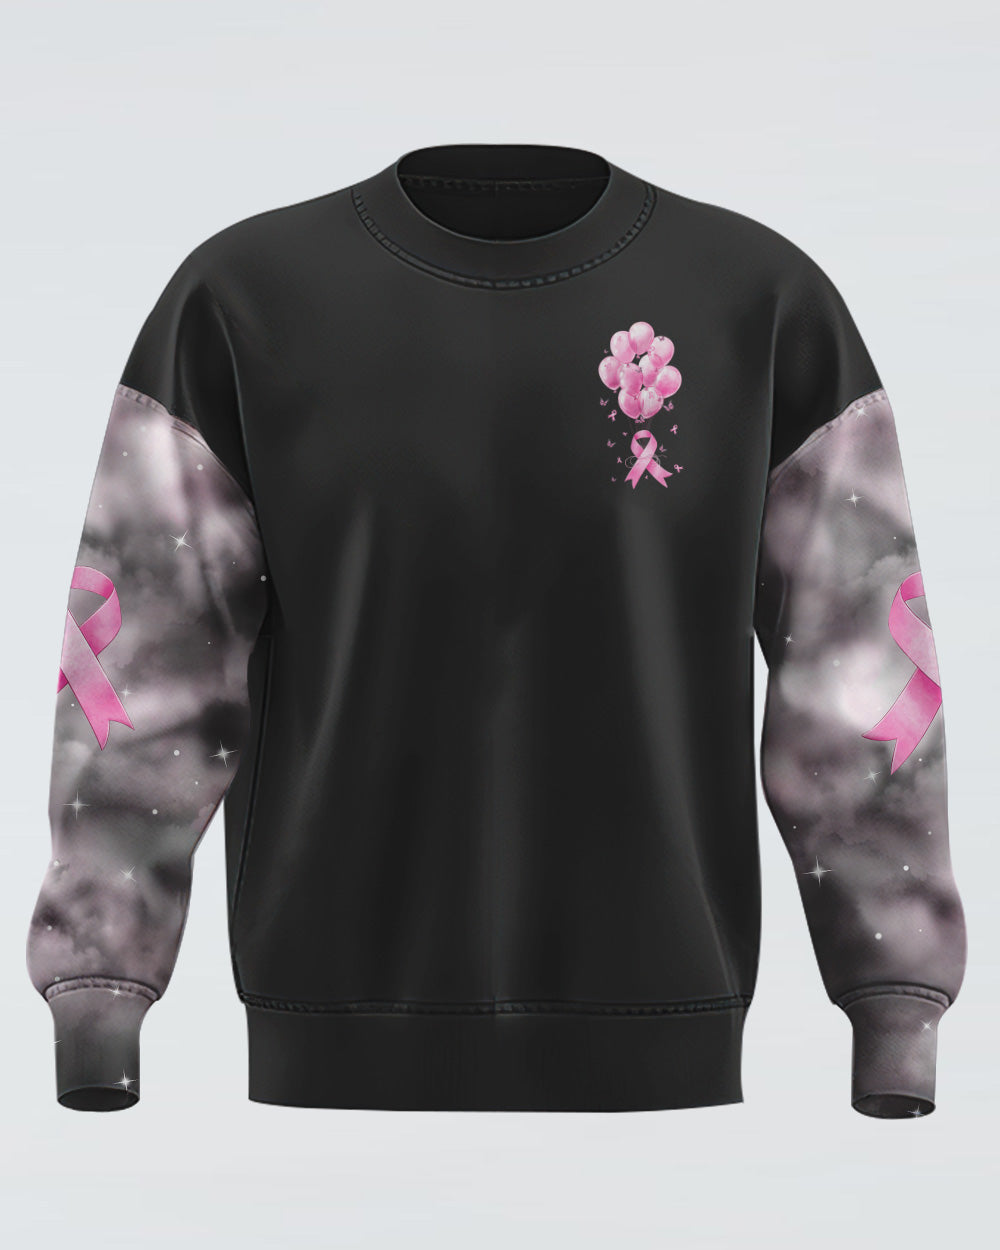 Pink Balloon Ribbon Butterfly Women's Breast Cancer Awareness Sweatshirt